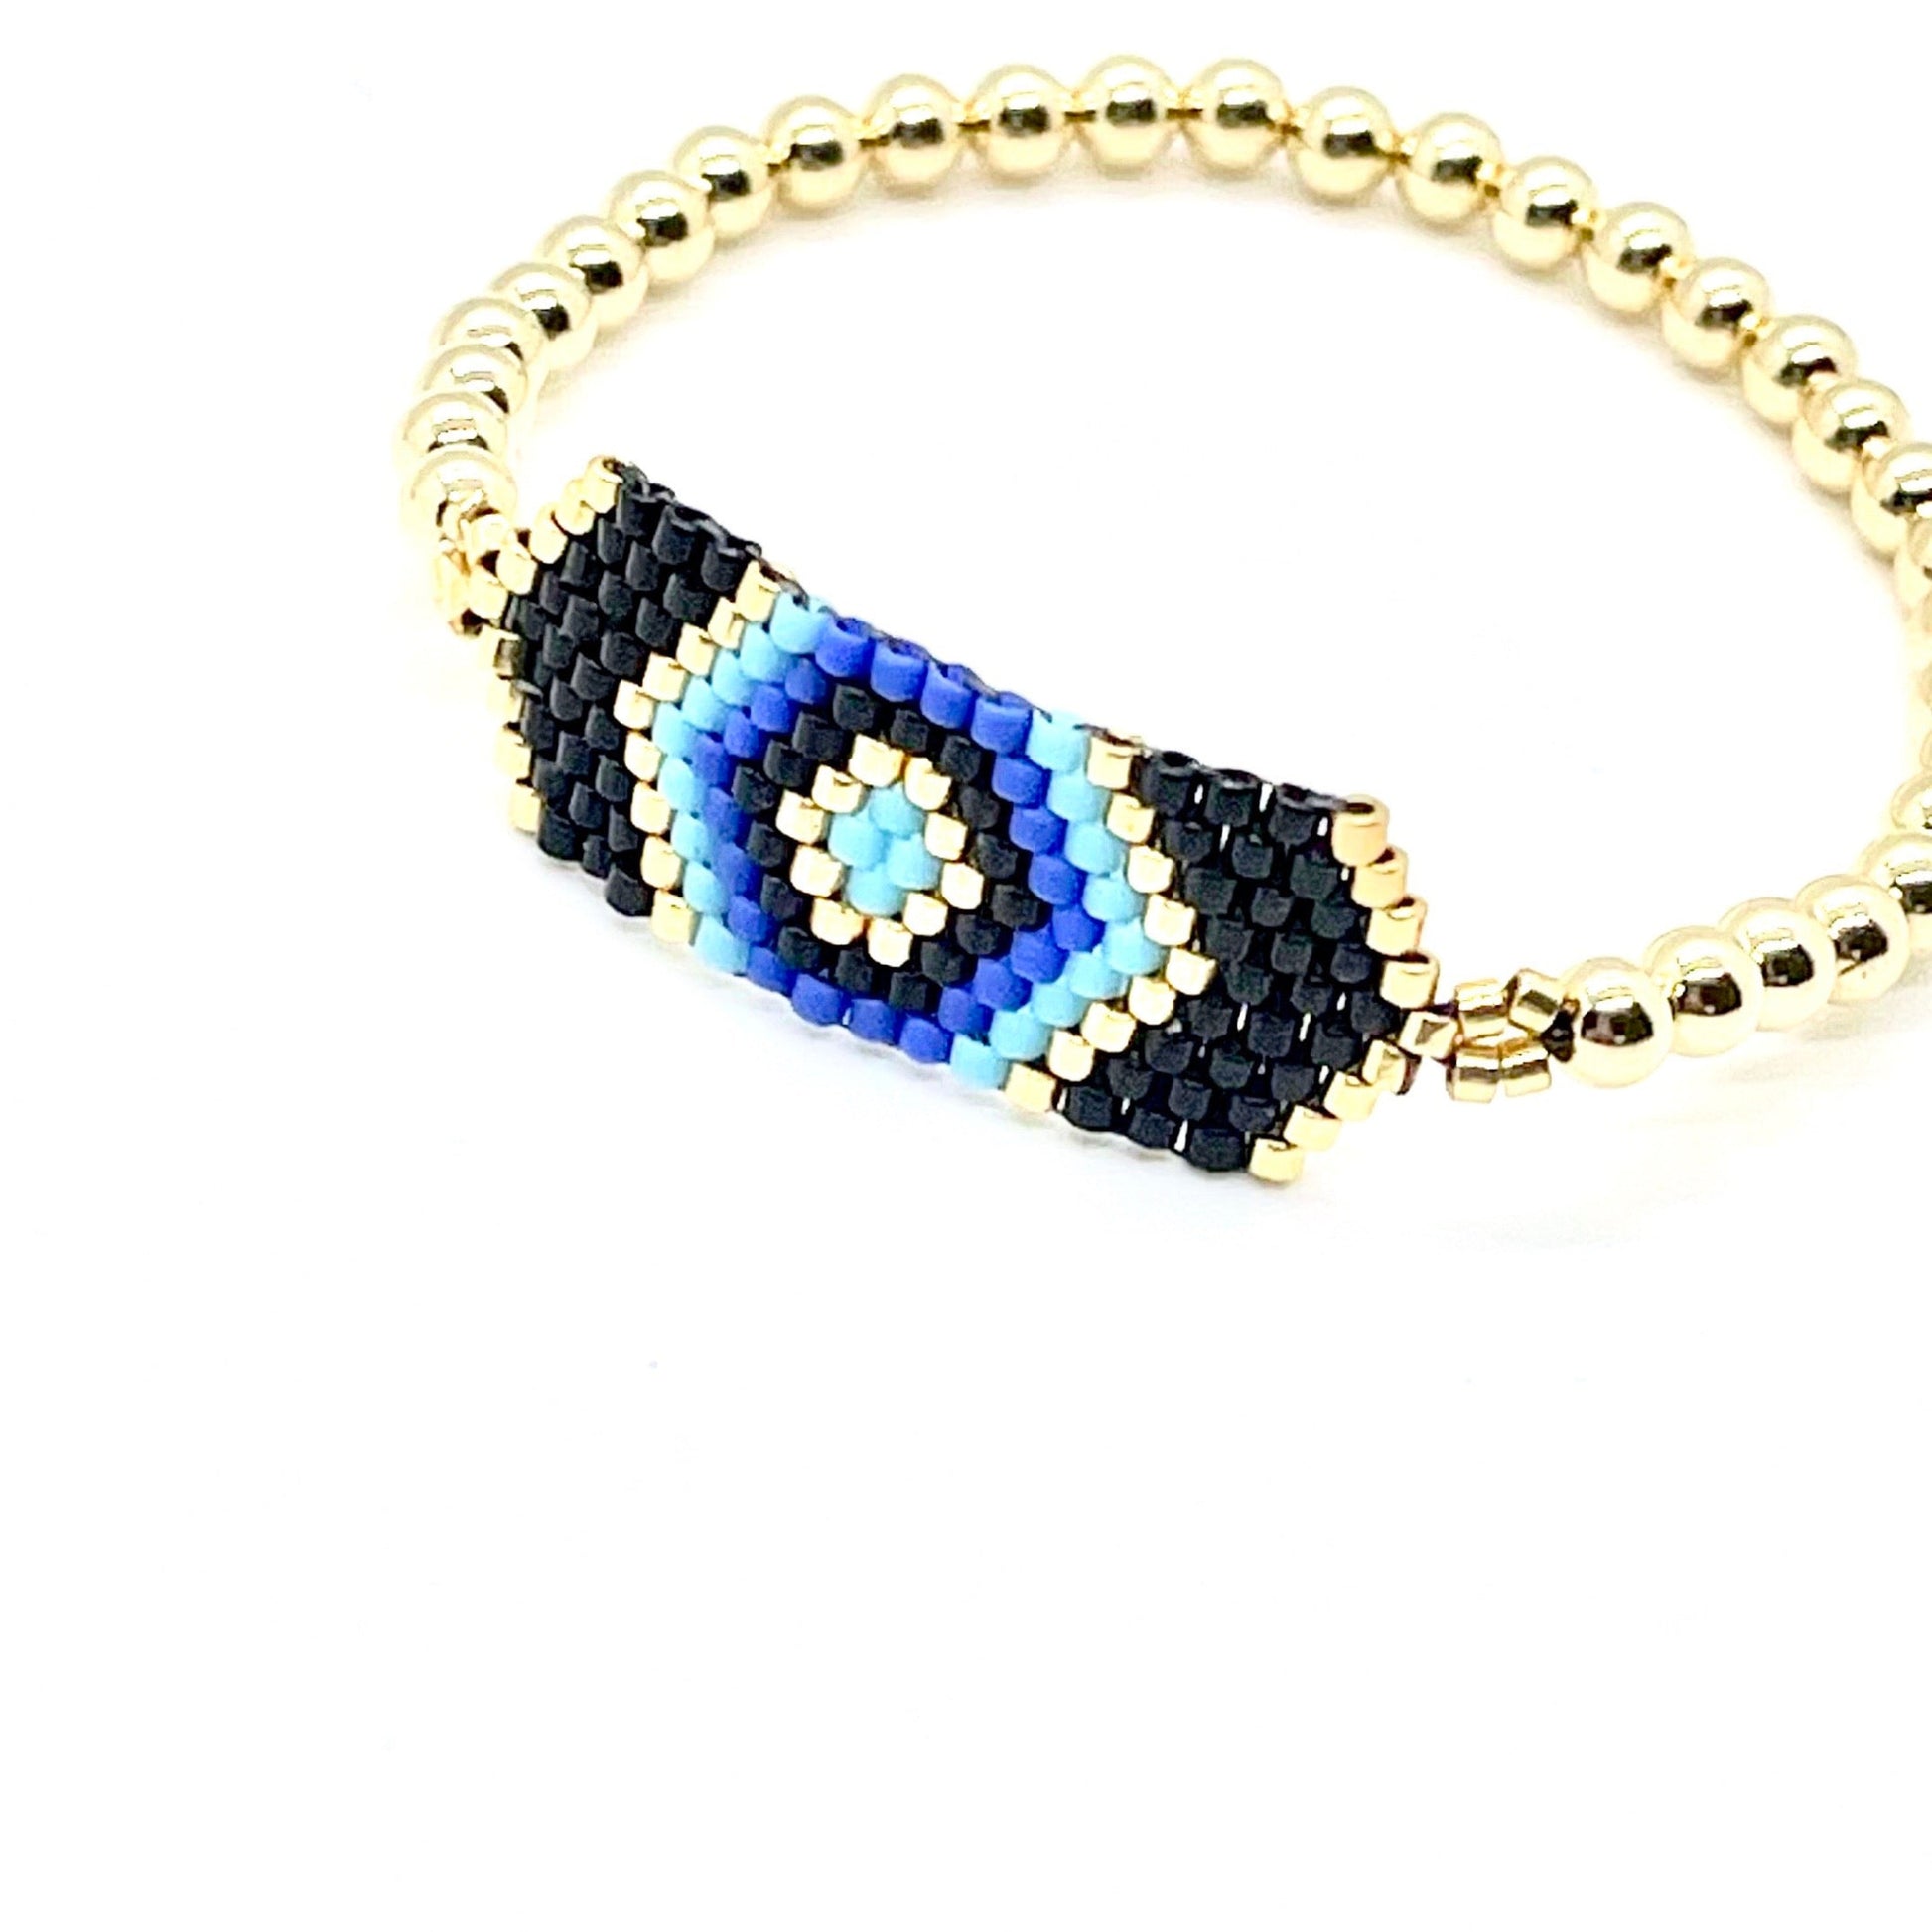 Evil eye beaded bracelet. Black evil eye with blue and gold beads on elastic stretch.